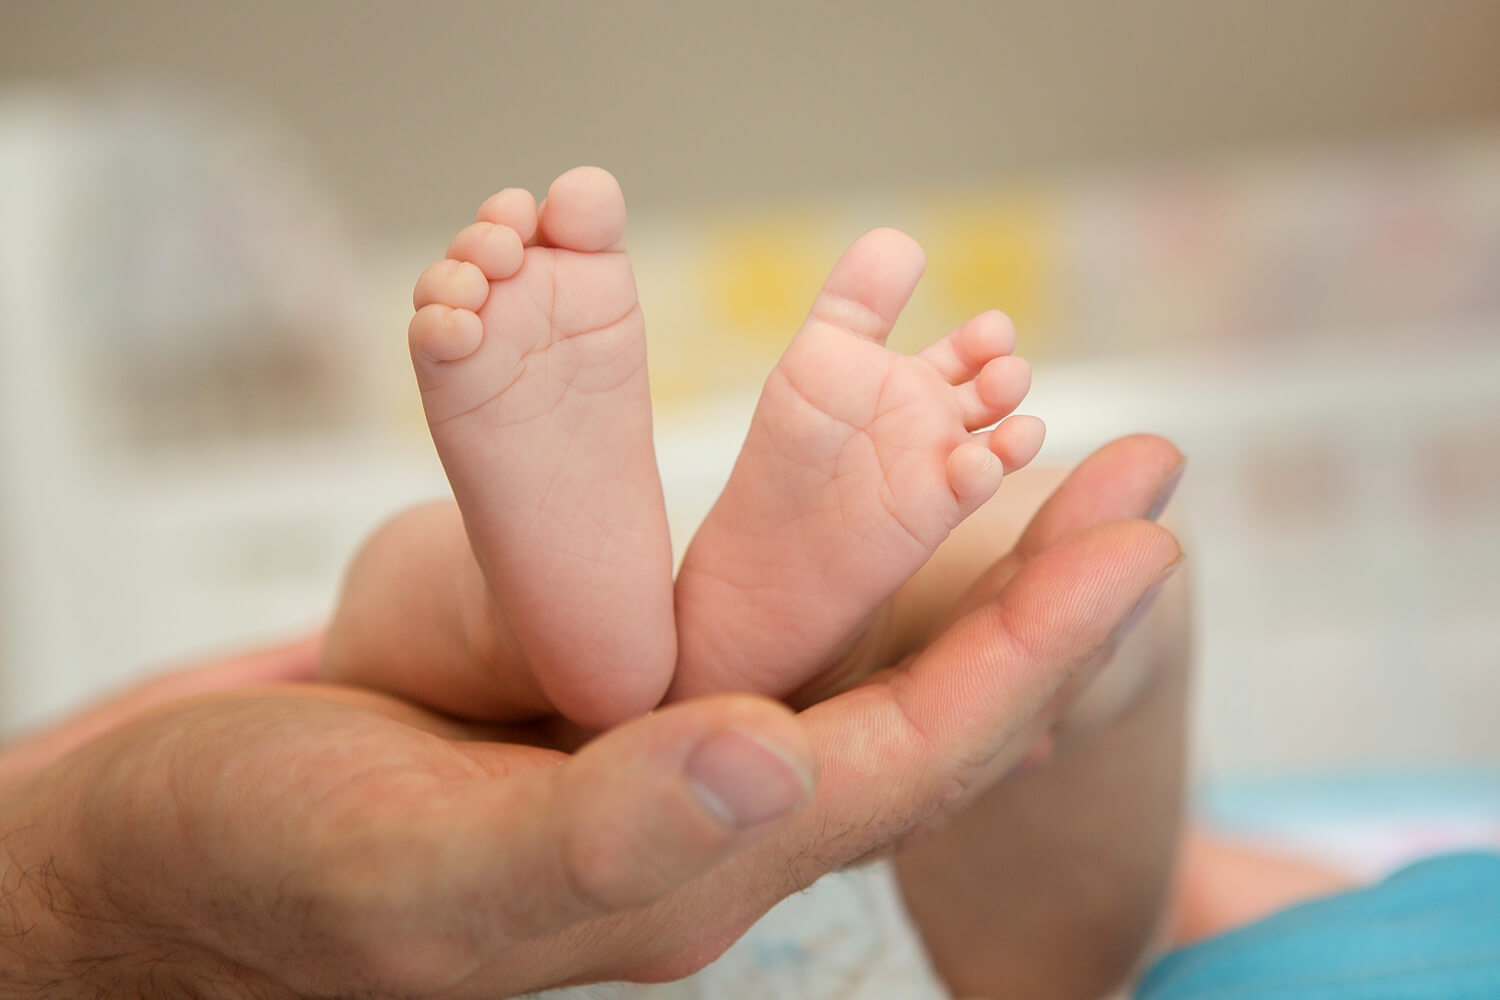 Temporary Findings In Newborn Babies